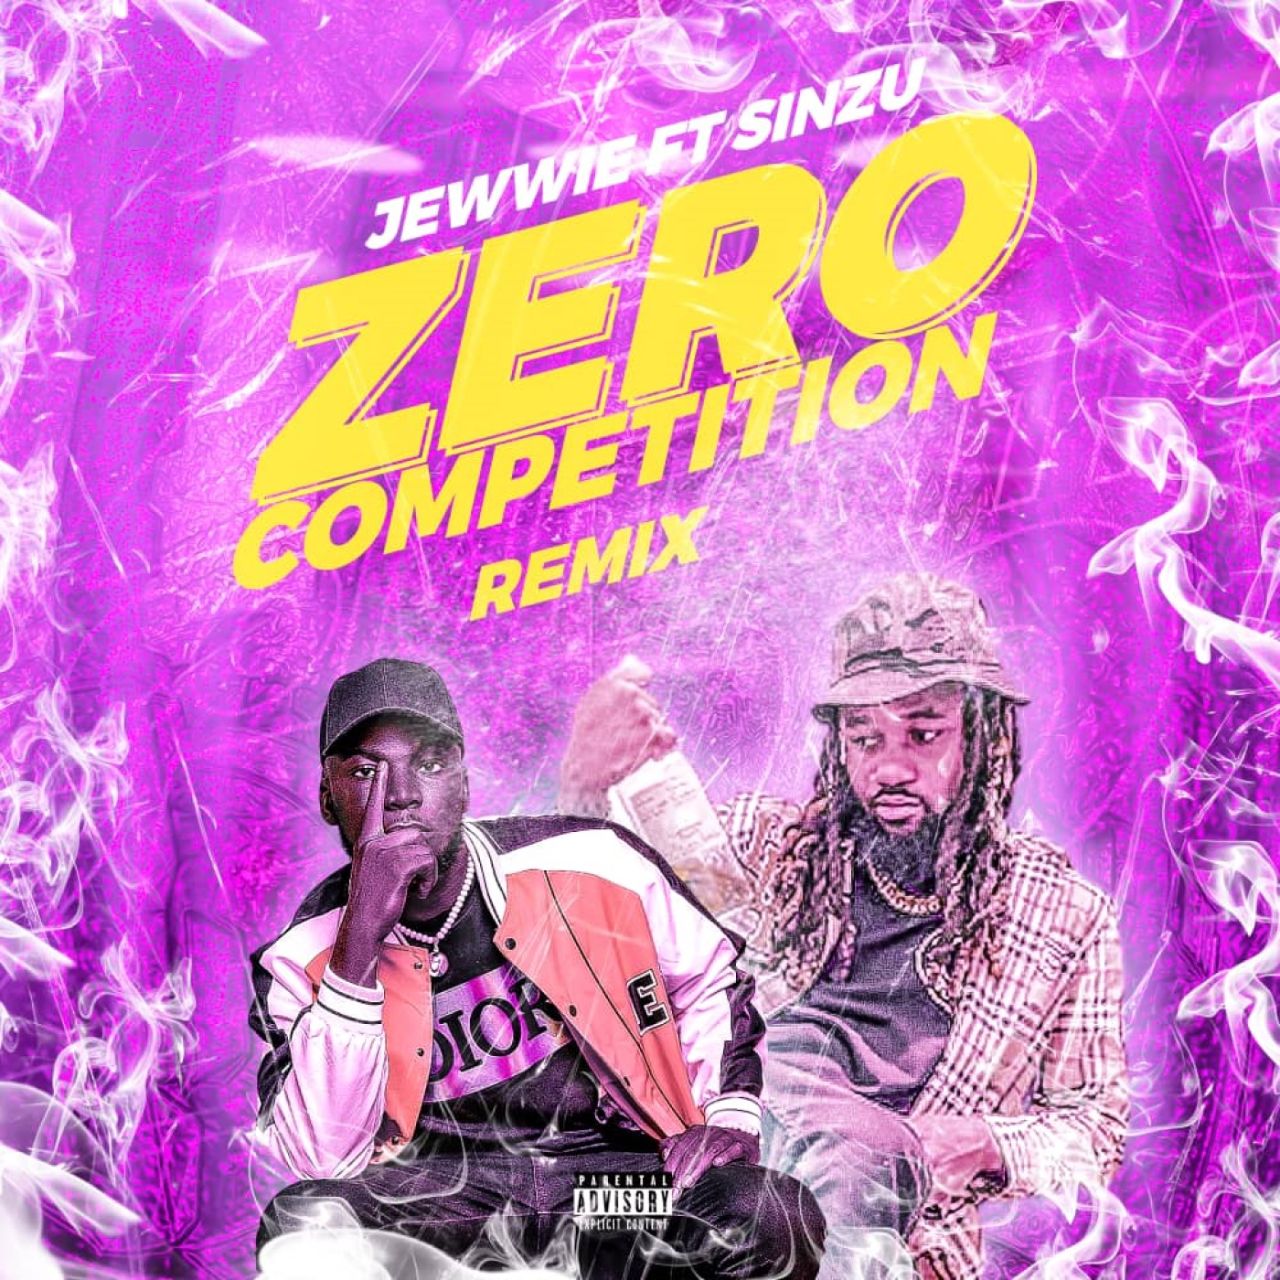 Jewwie - Zero Competition (Remix) ft. Sinzu